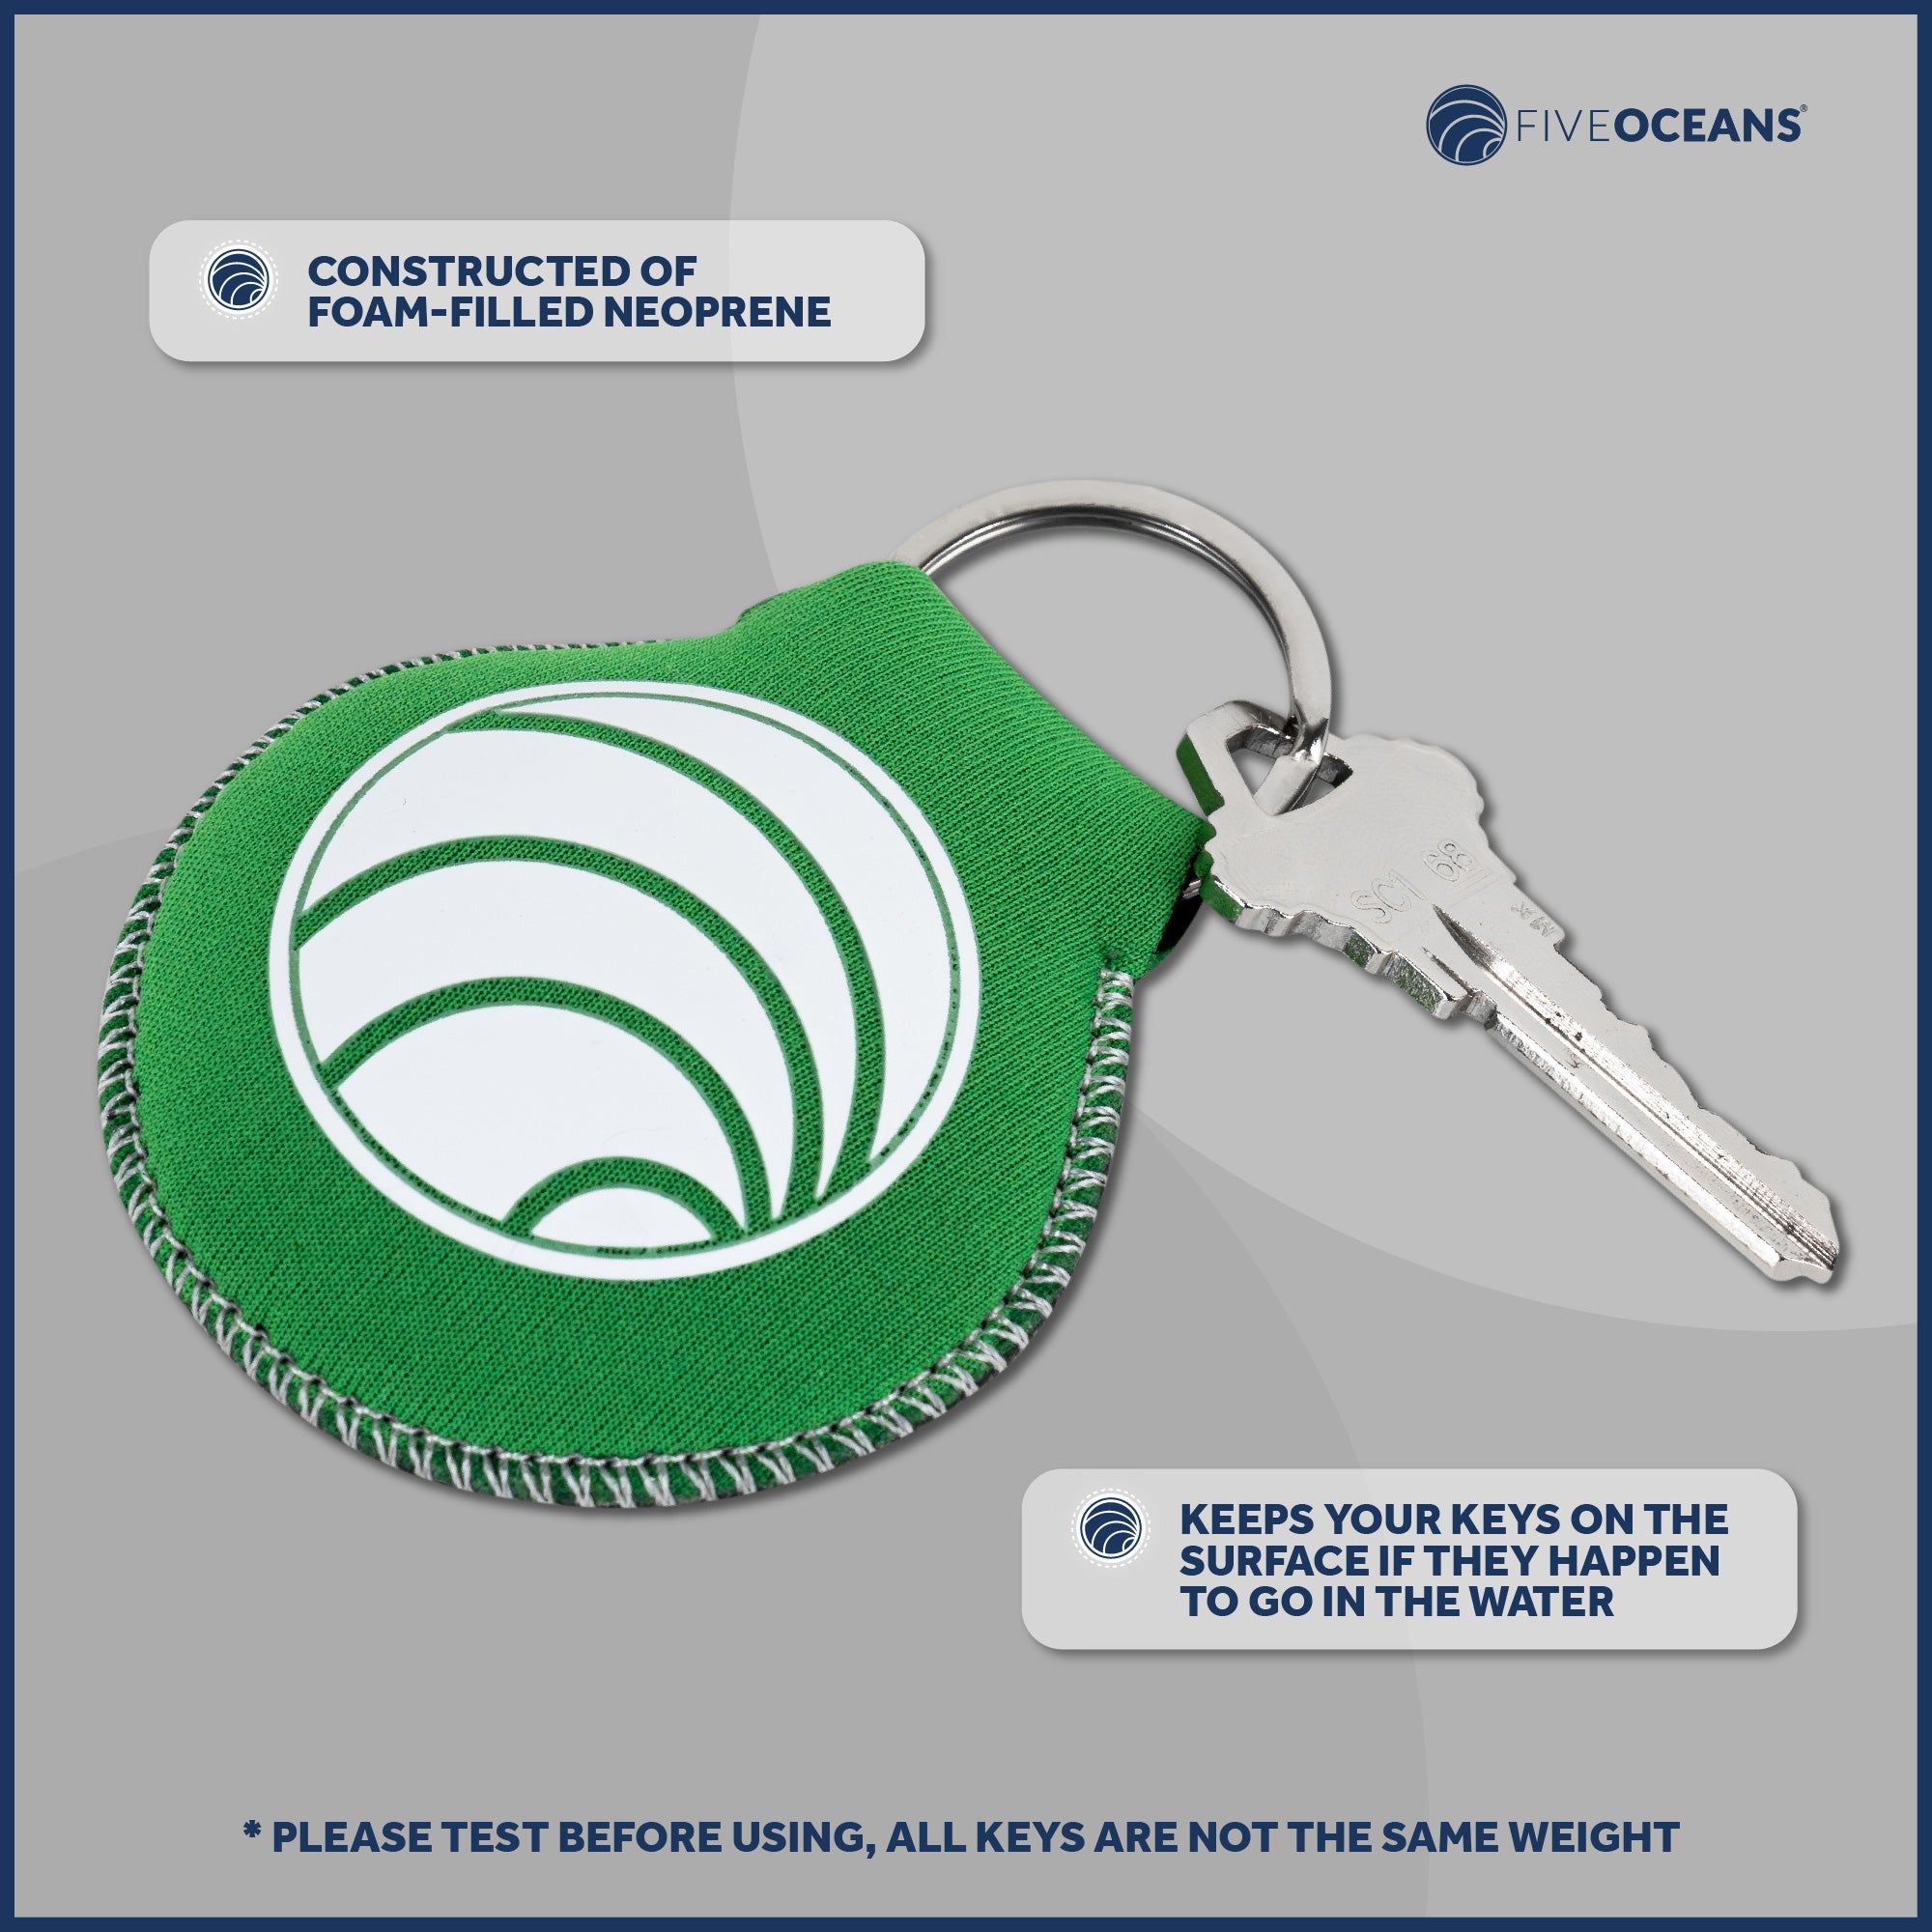 Floating Neoprene Keychain, Green - FO4495-G